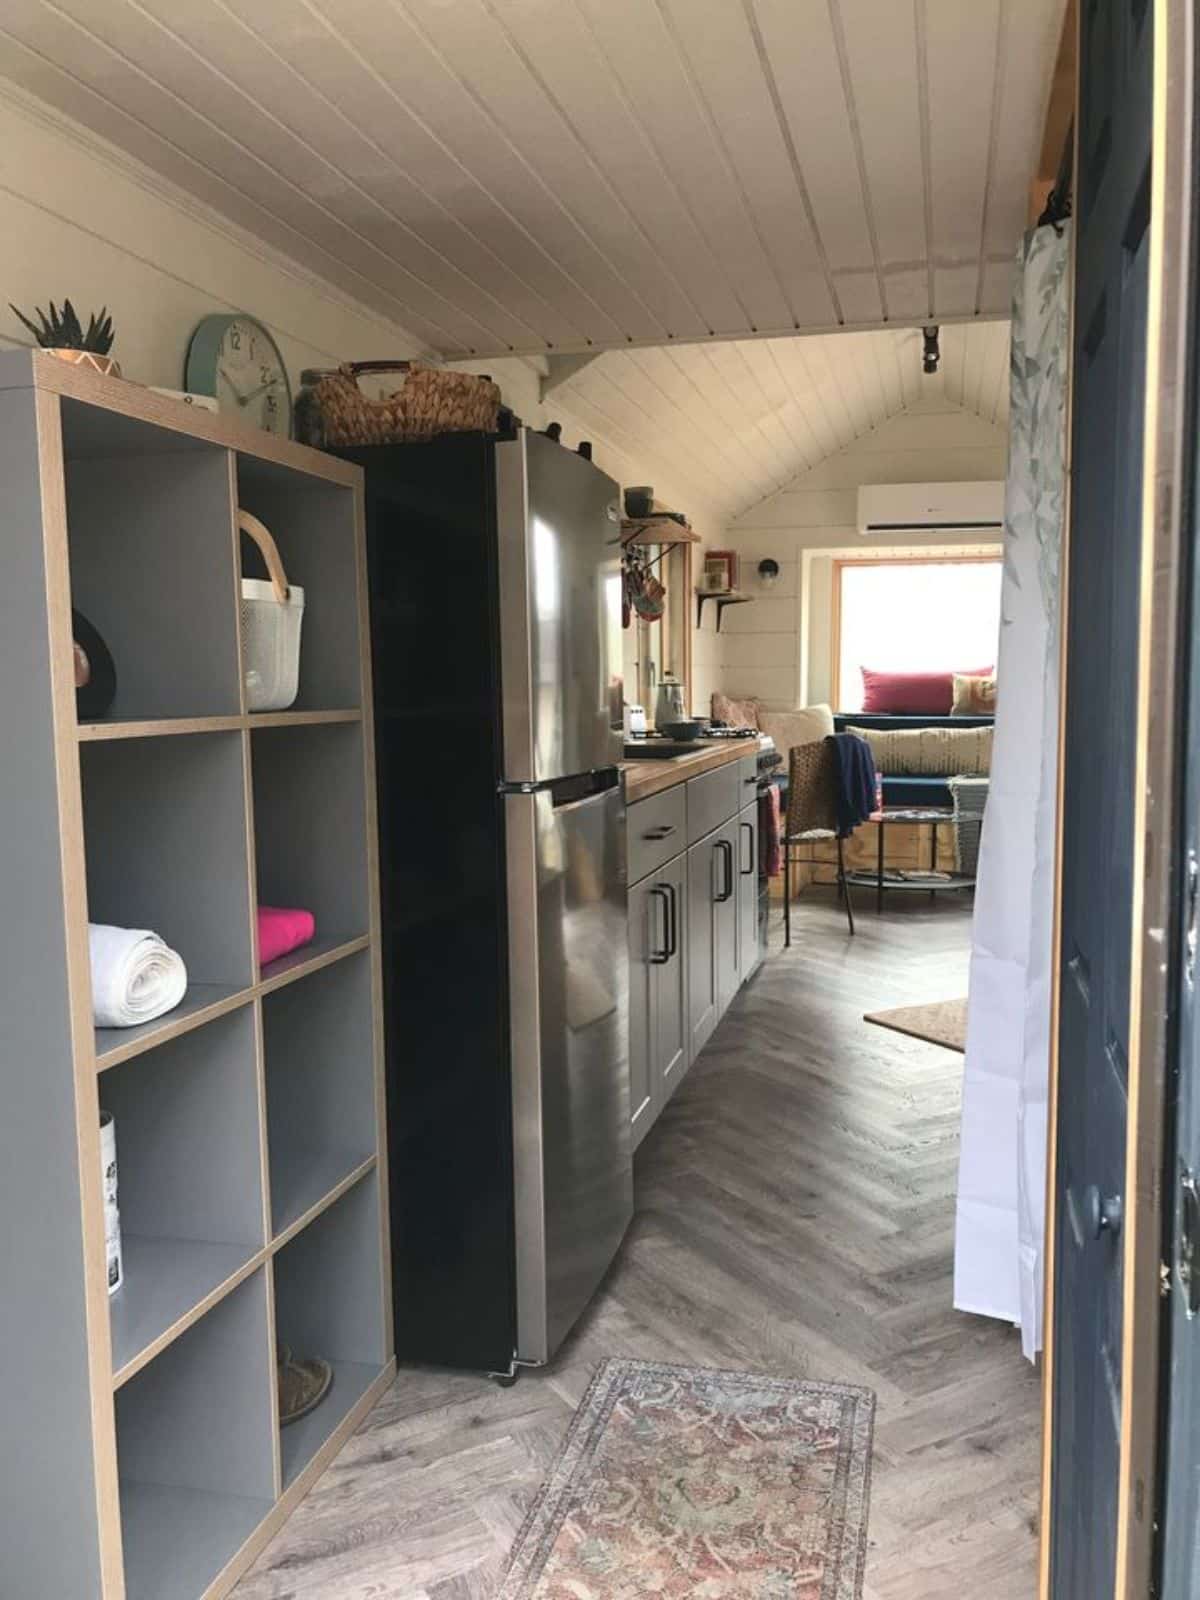 Wooden Interiors of 24’ Custom Built Tiny Home, it has refrigerator, storage cabinets etc